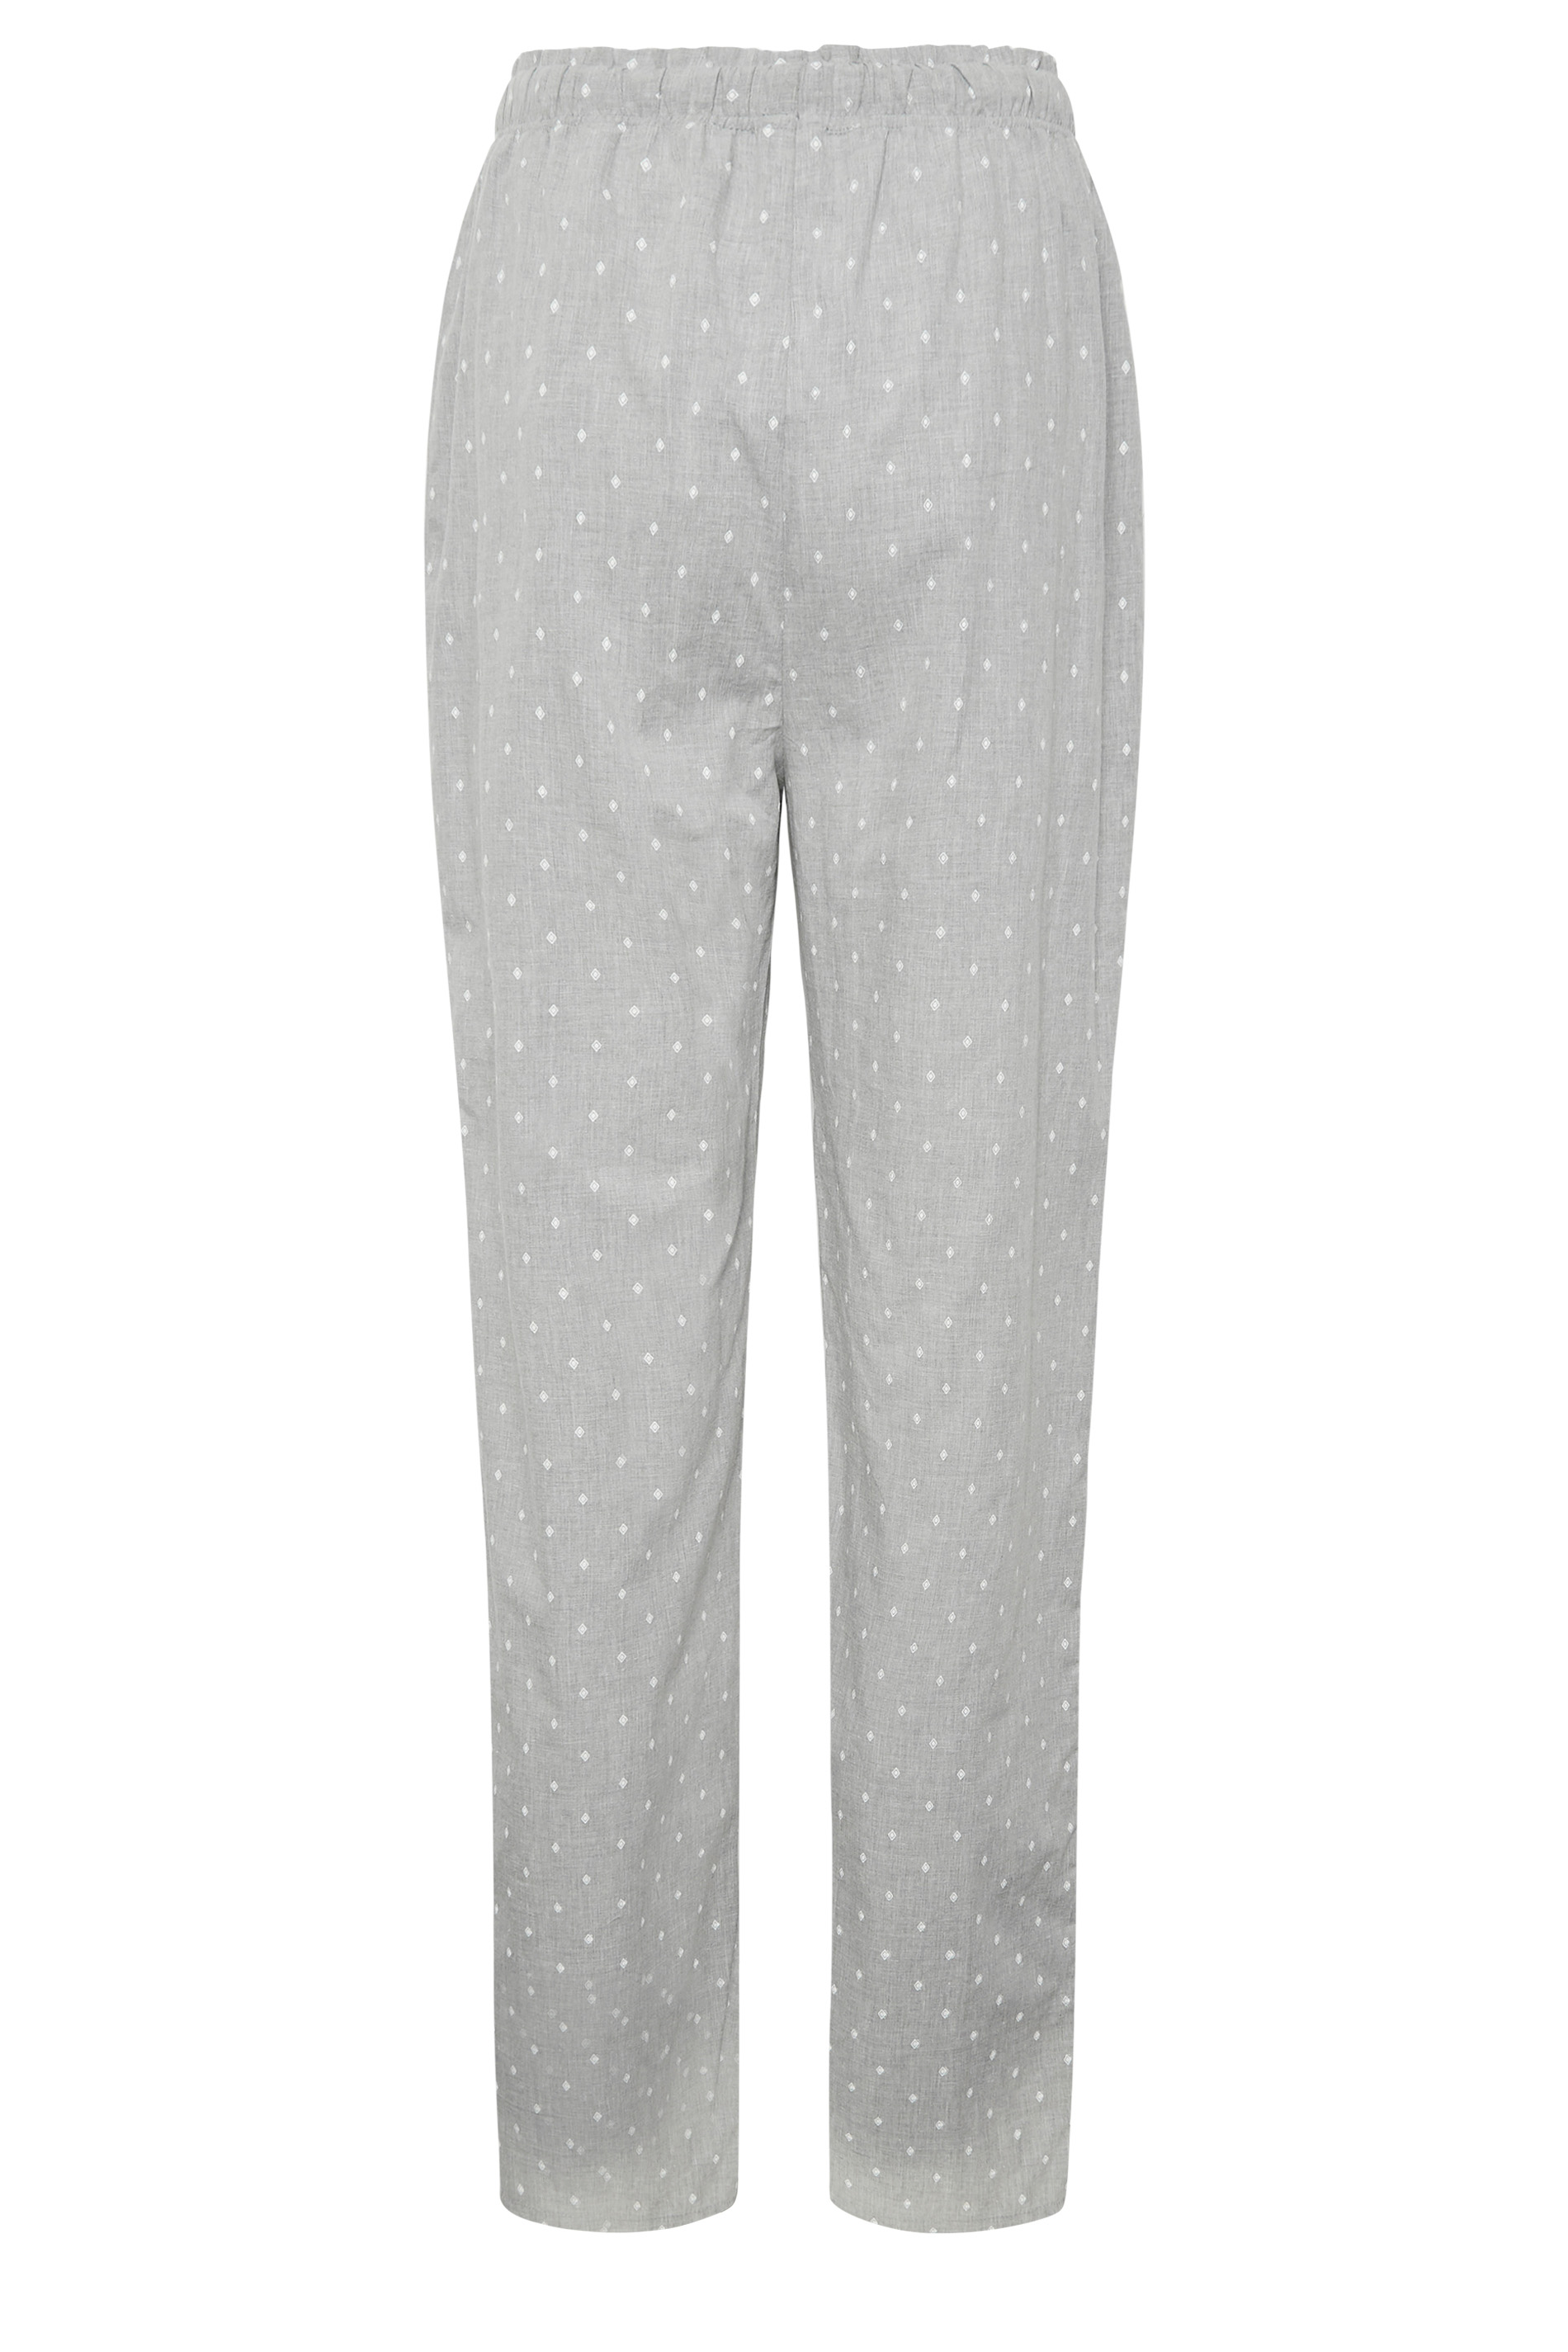 LTS Tall Grey Polka Dot Cotton Pyjama Bottoms | Long Tall Sally 3